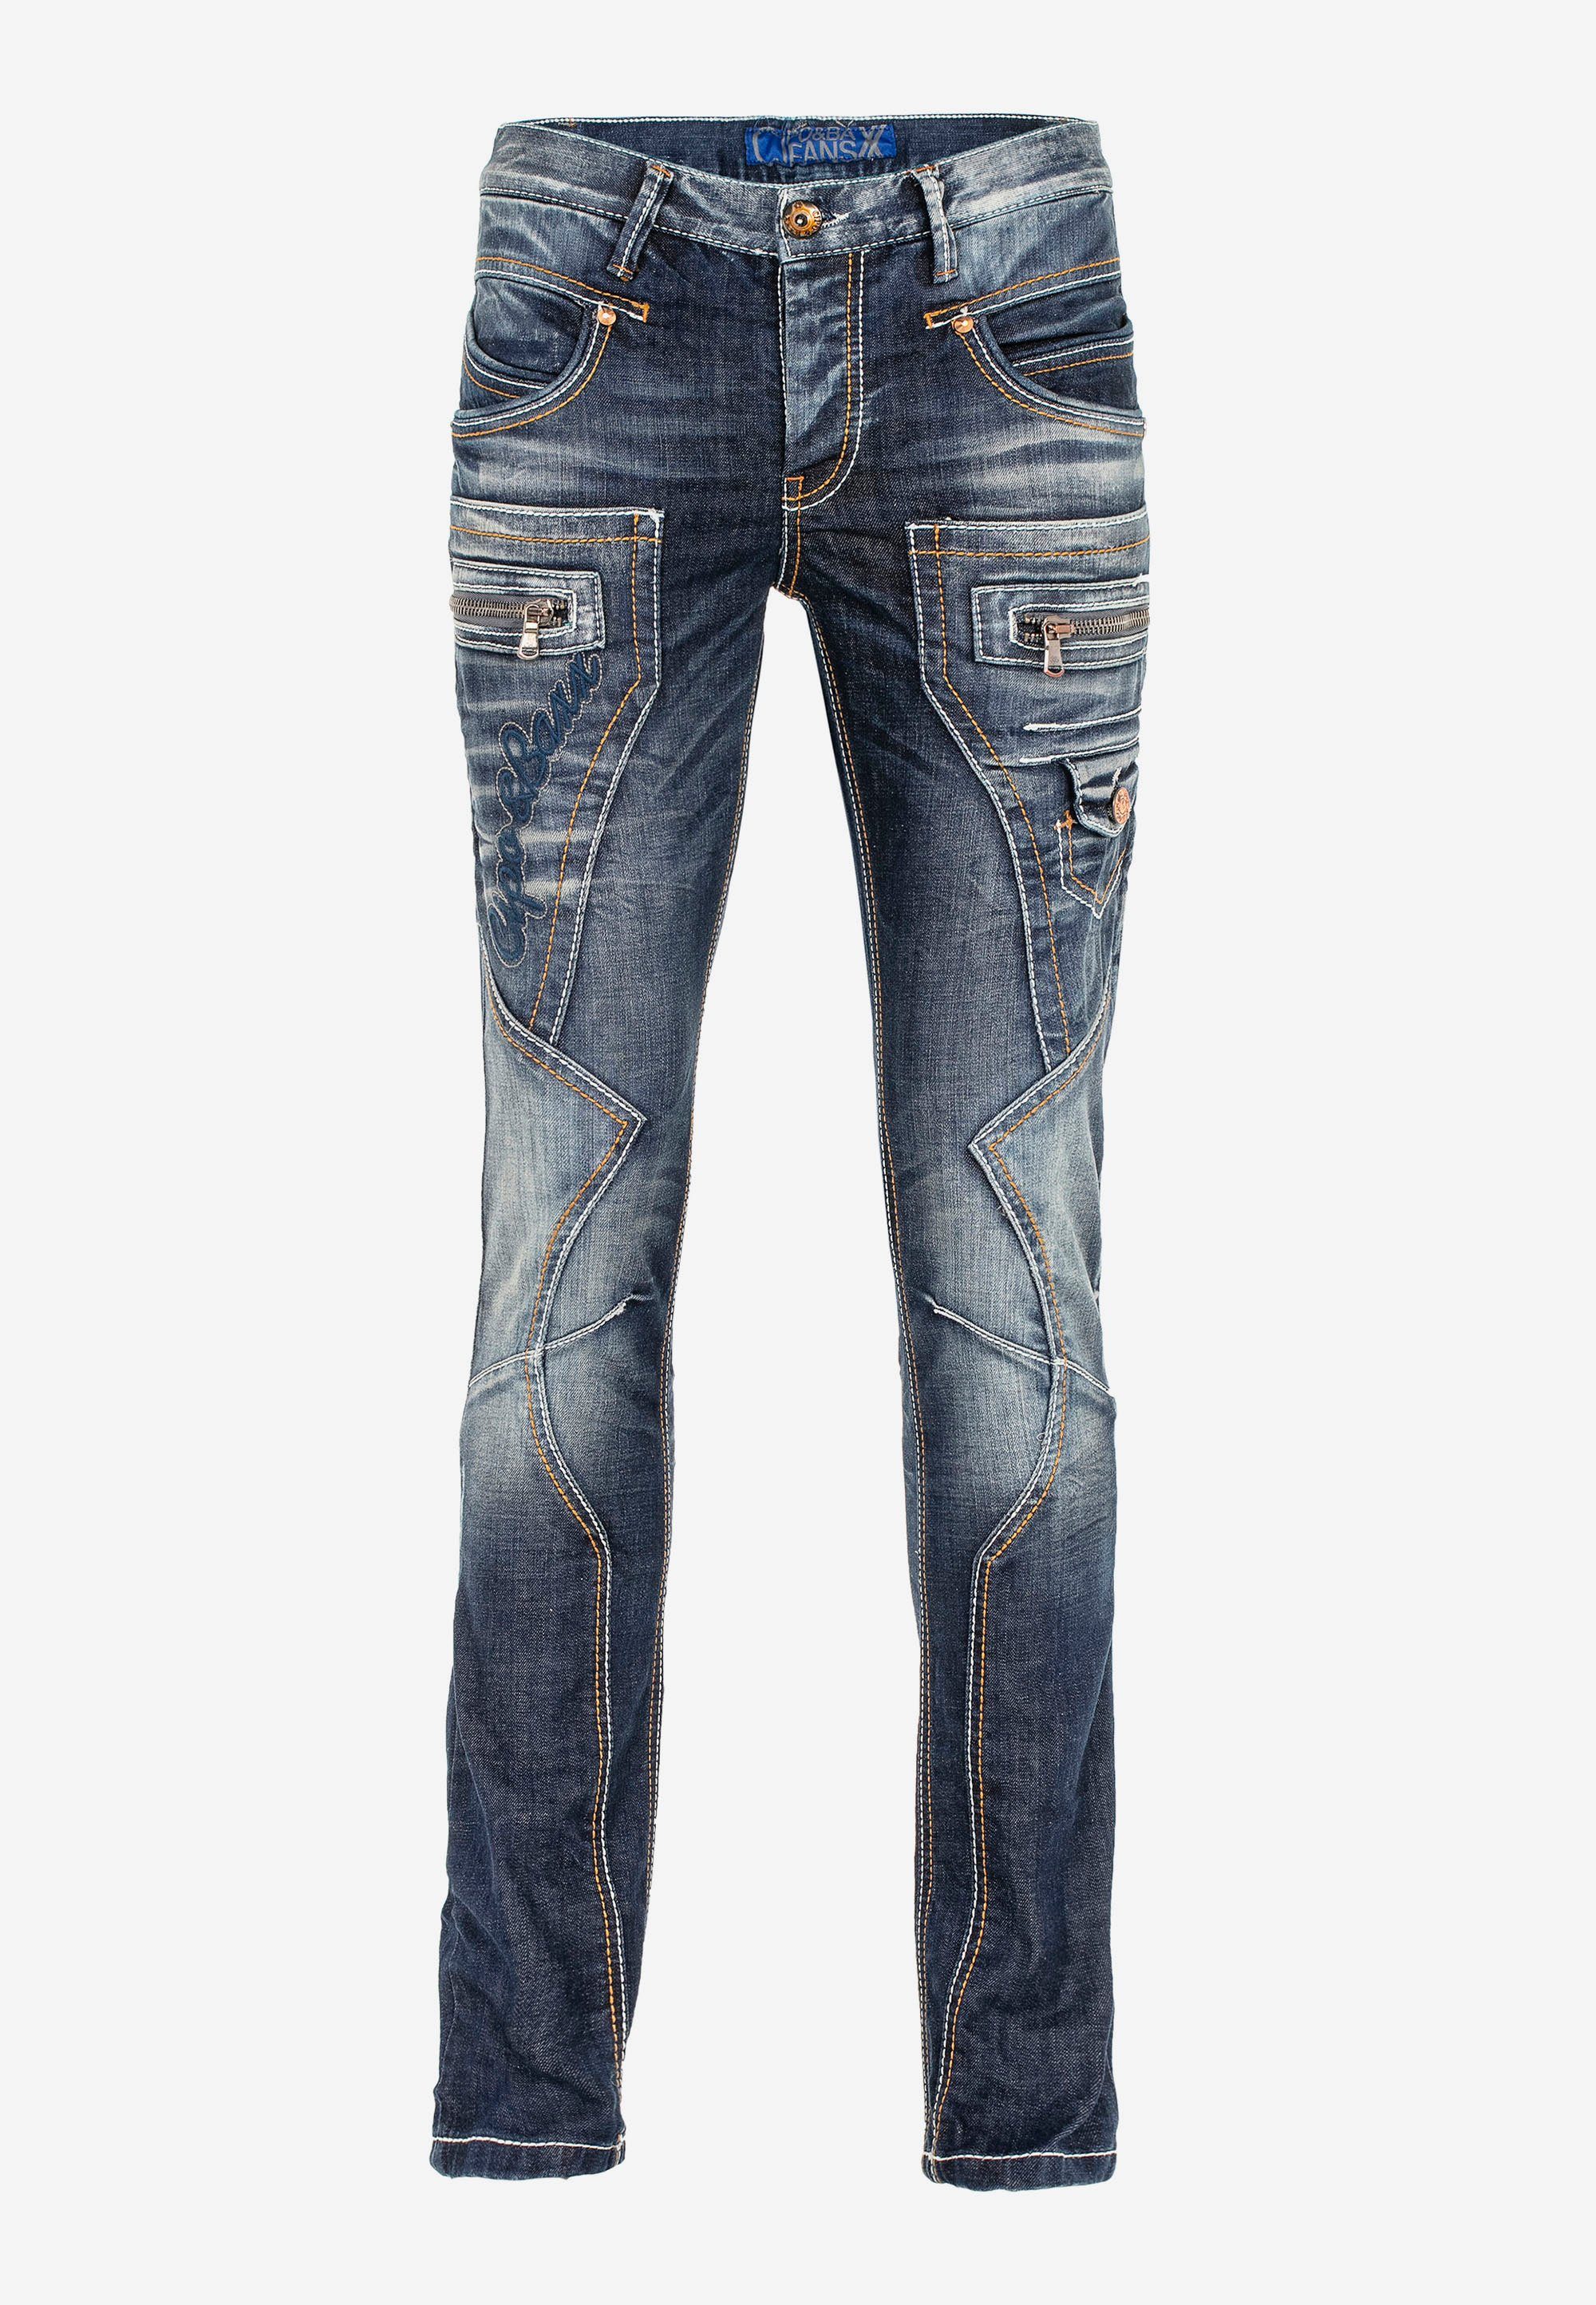 Cipo & Baxx Jeans mit Kontrastnähten Bequeme